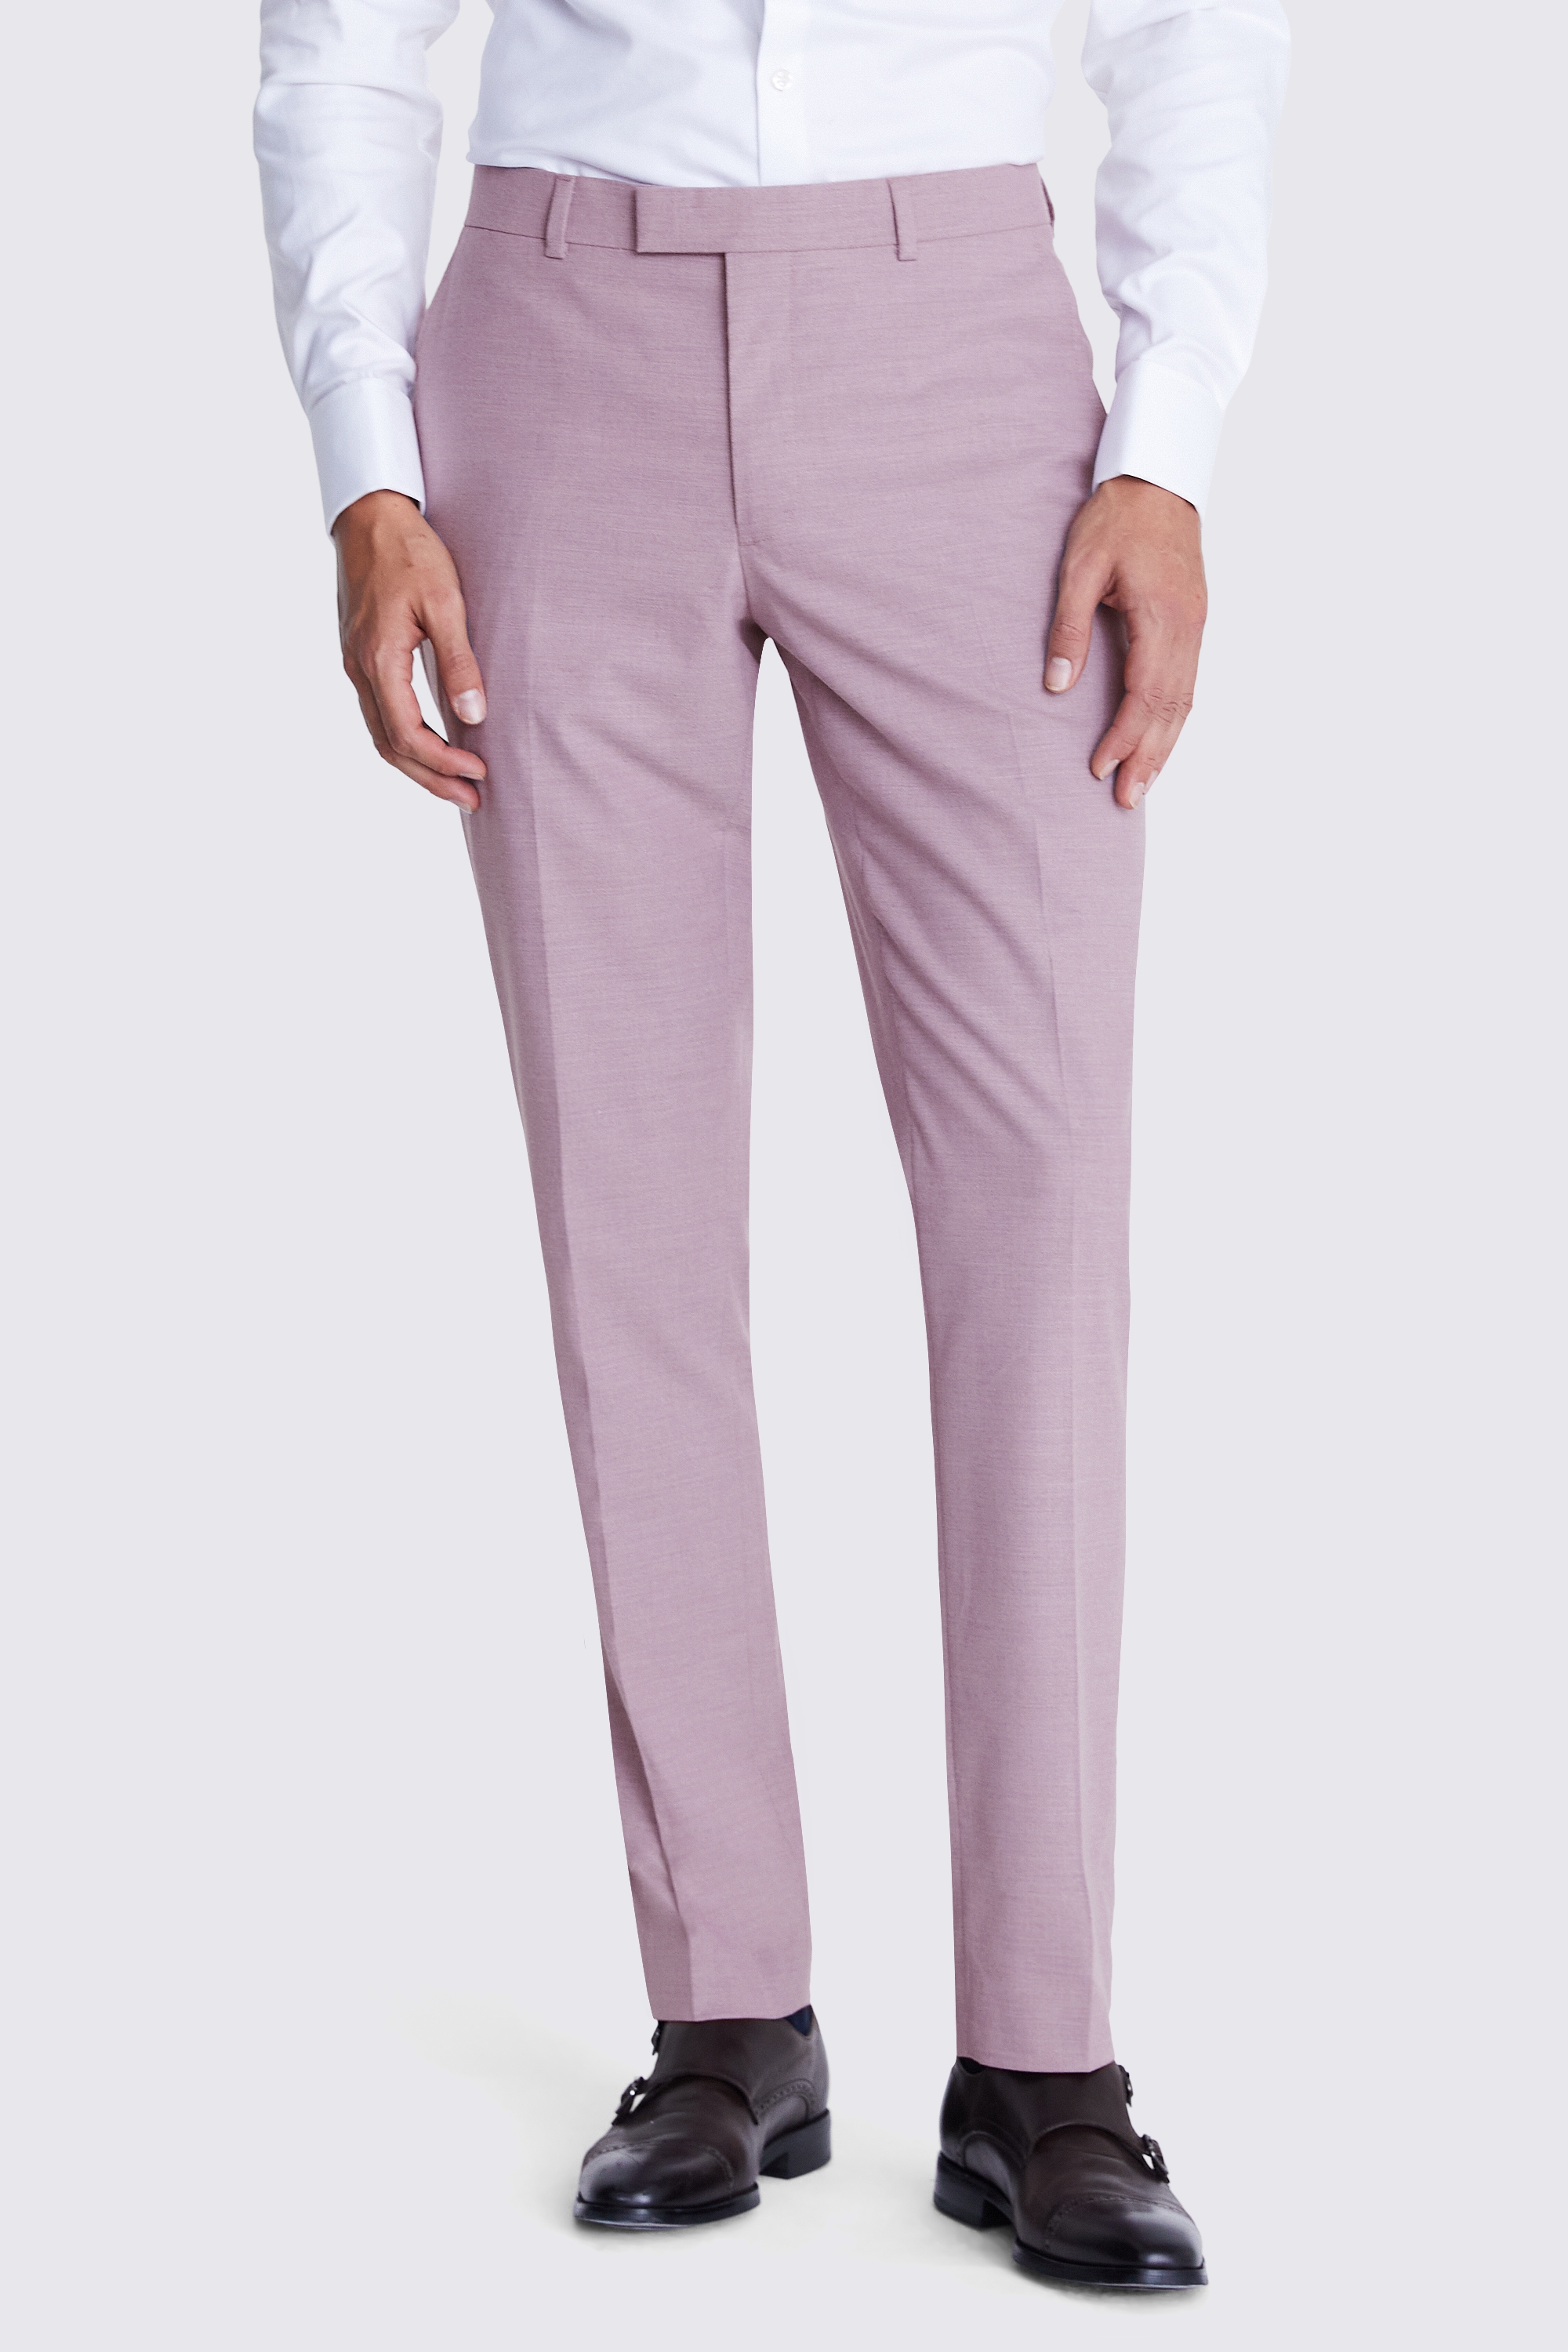 Slim Fit Quartz Pink Jacket | Buy Online at Moss